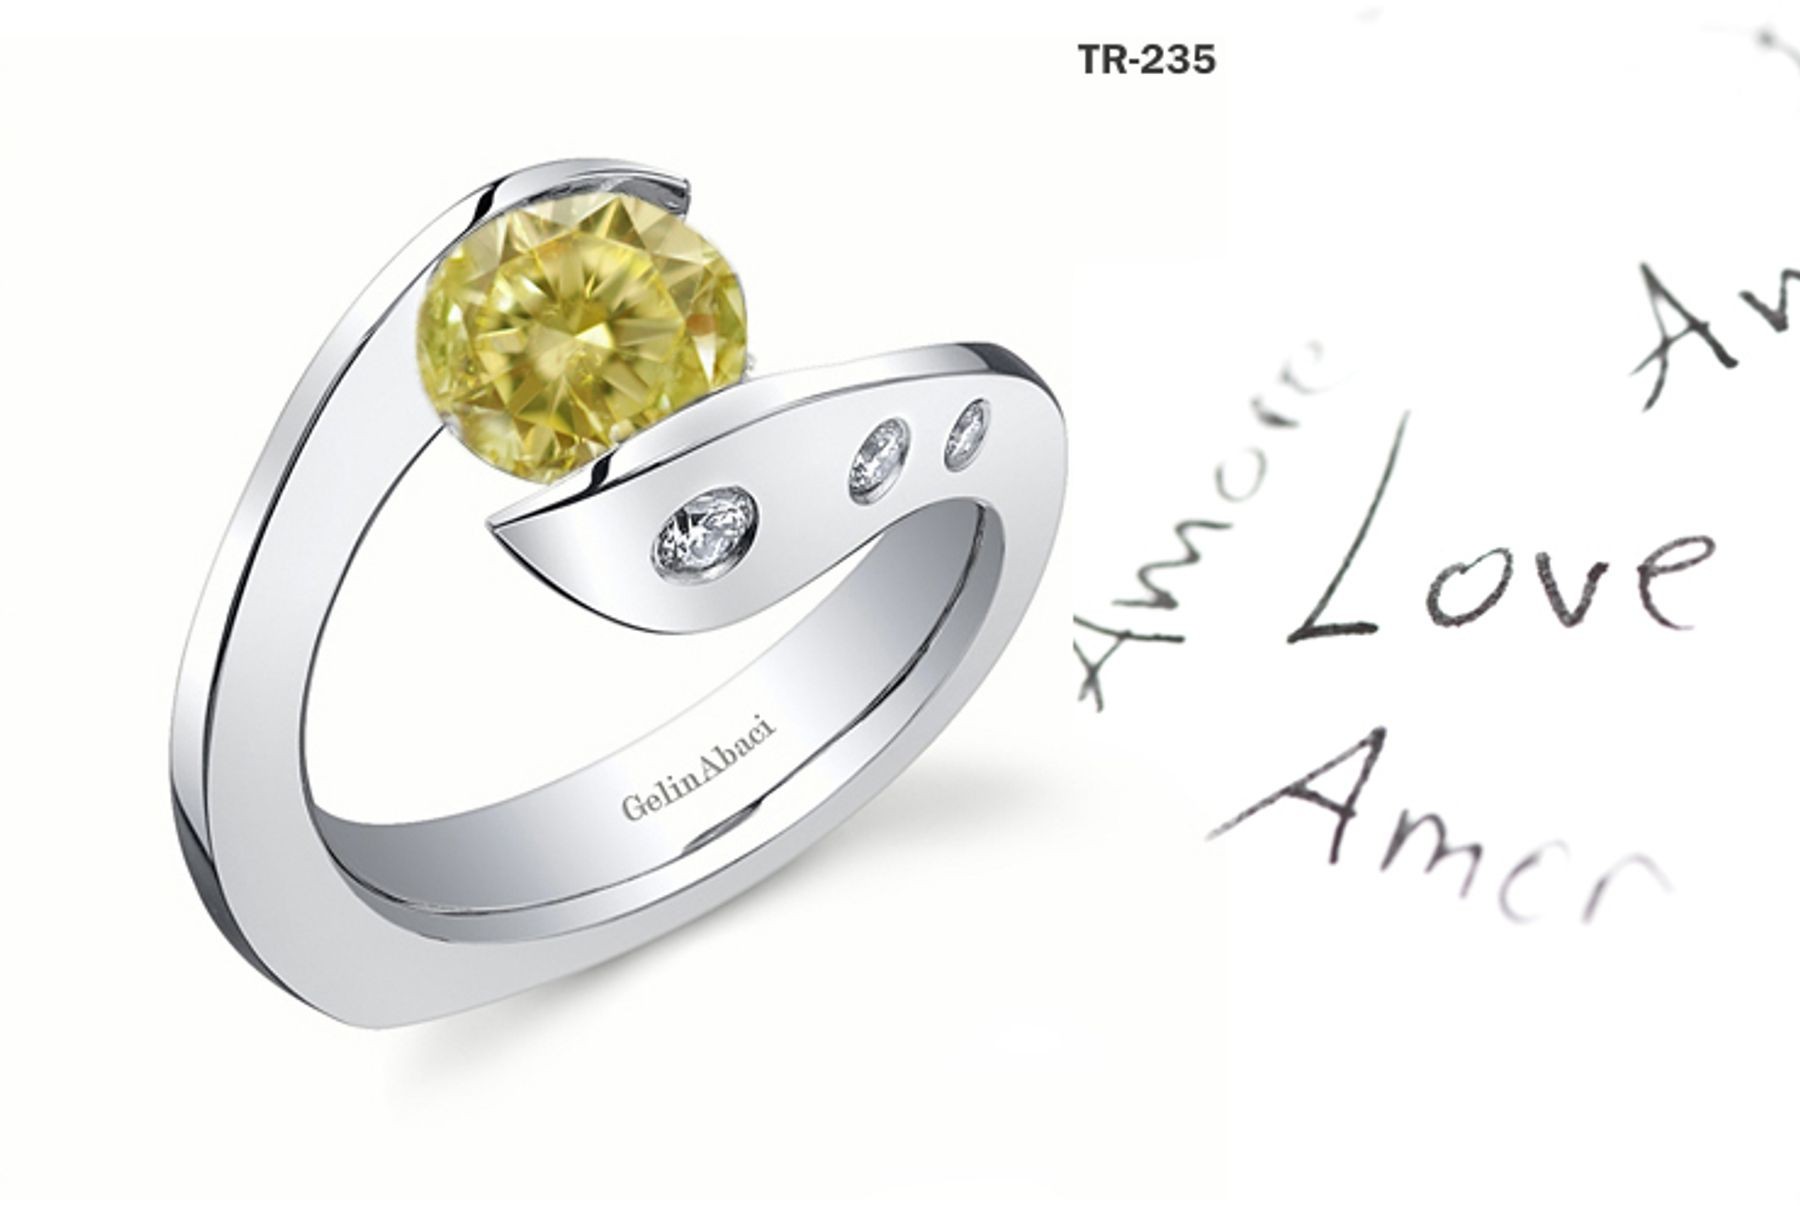 Premier Designer Tension Set Jewelry: Tension Set Yellow Diamond Rings